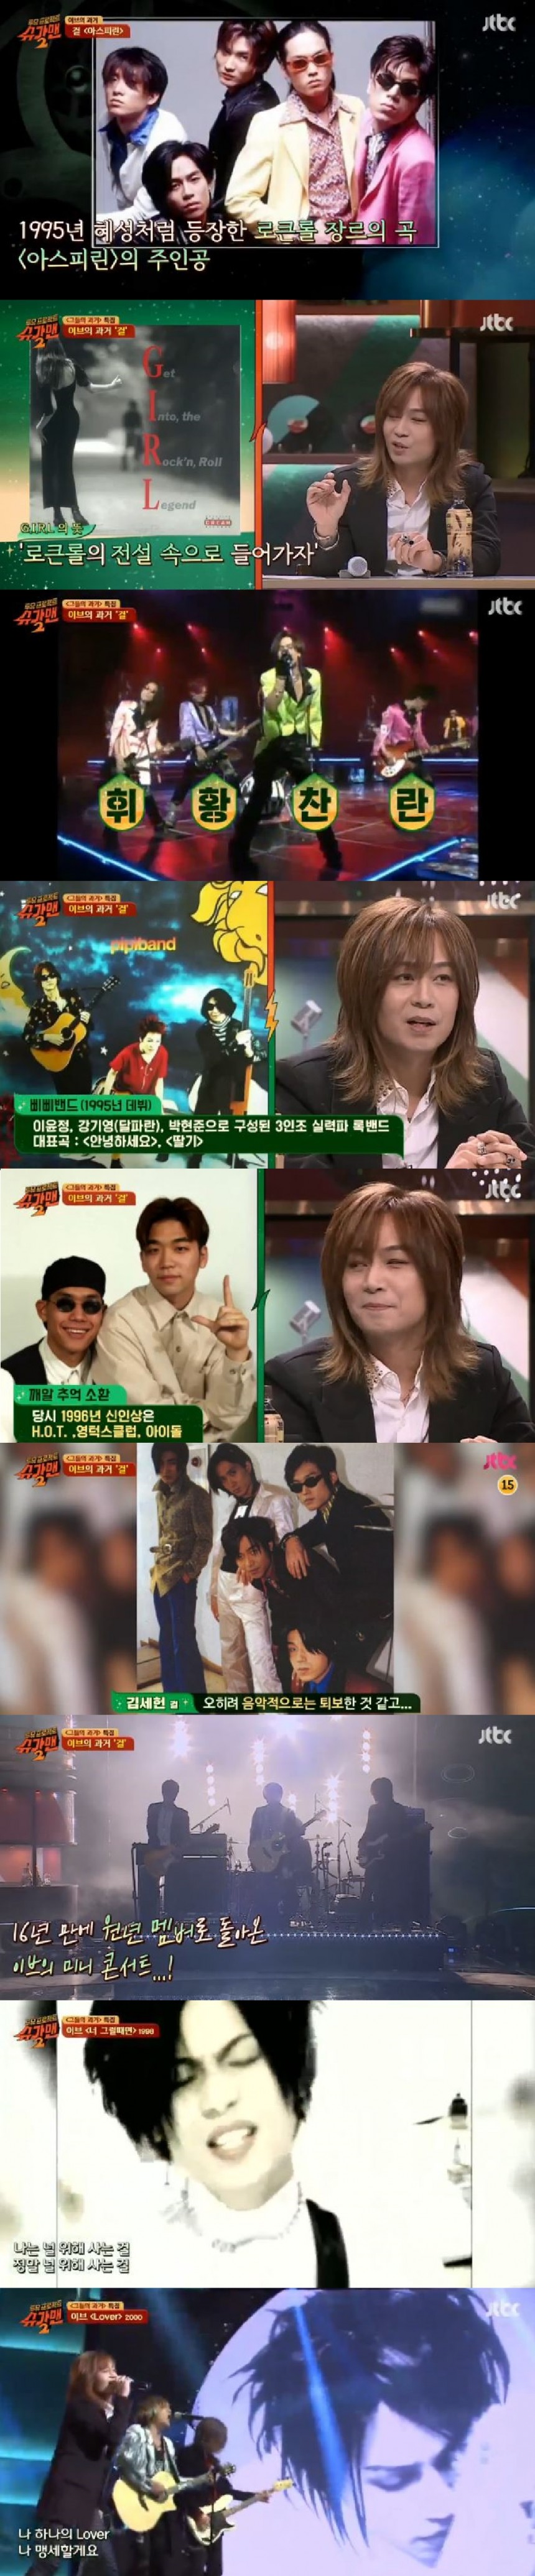 JTBC ‘슈가맨 시즌2’ 방송 캡쳐 